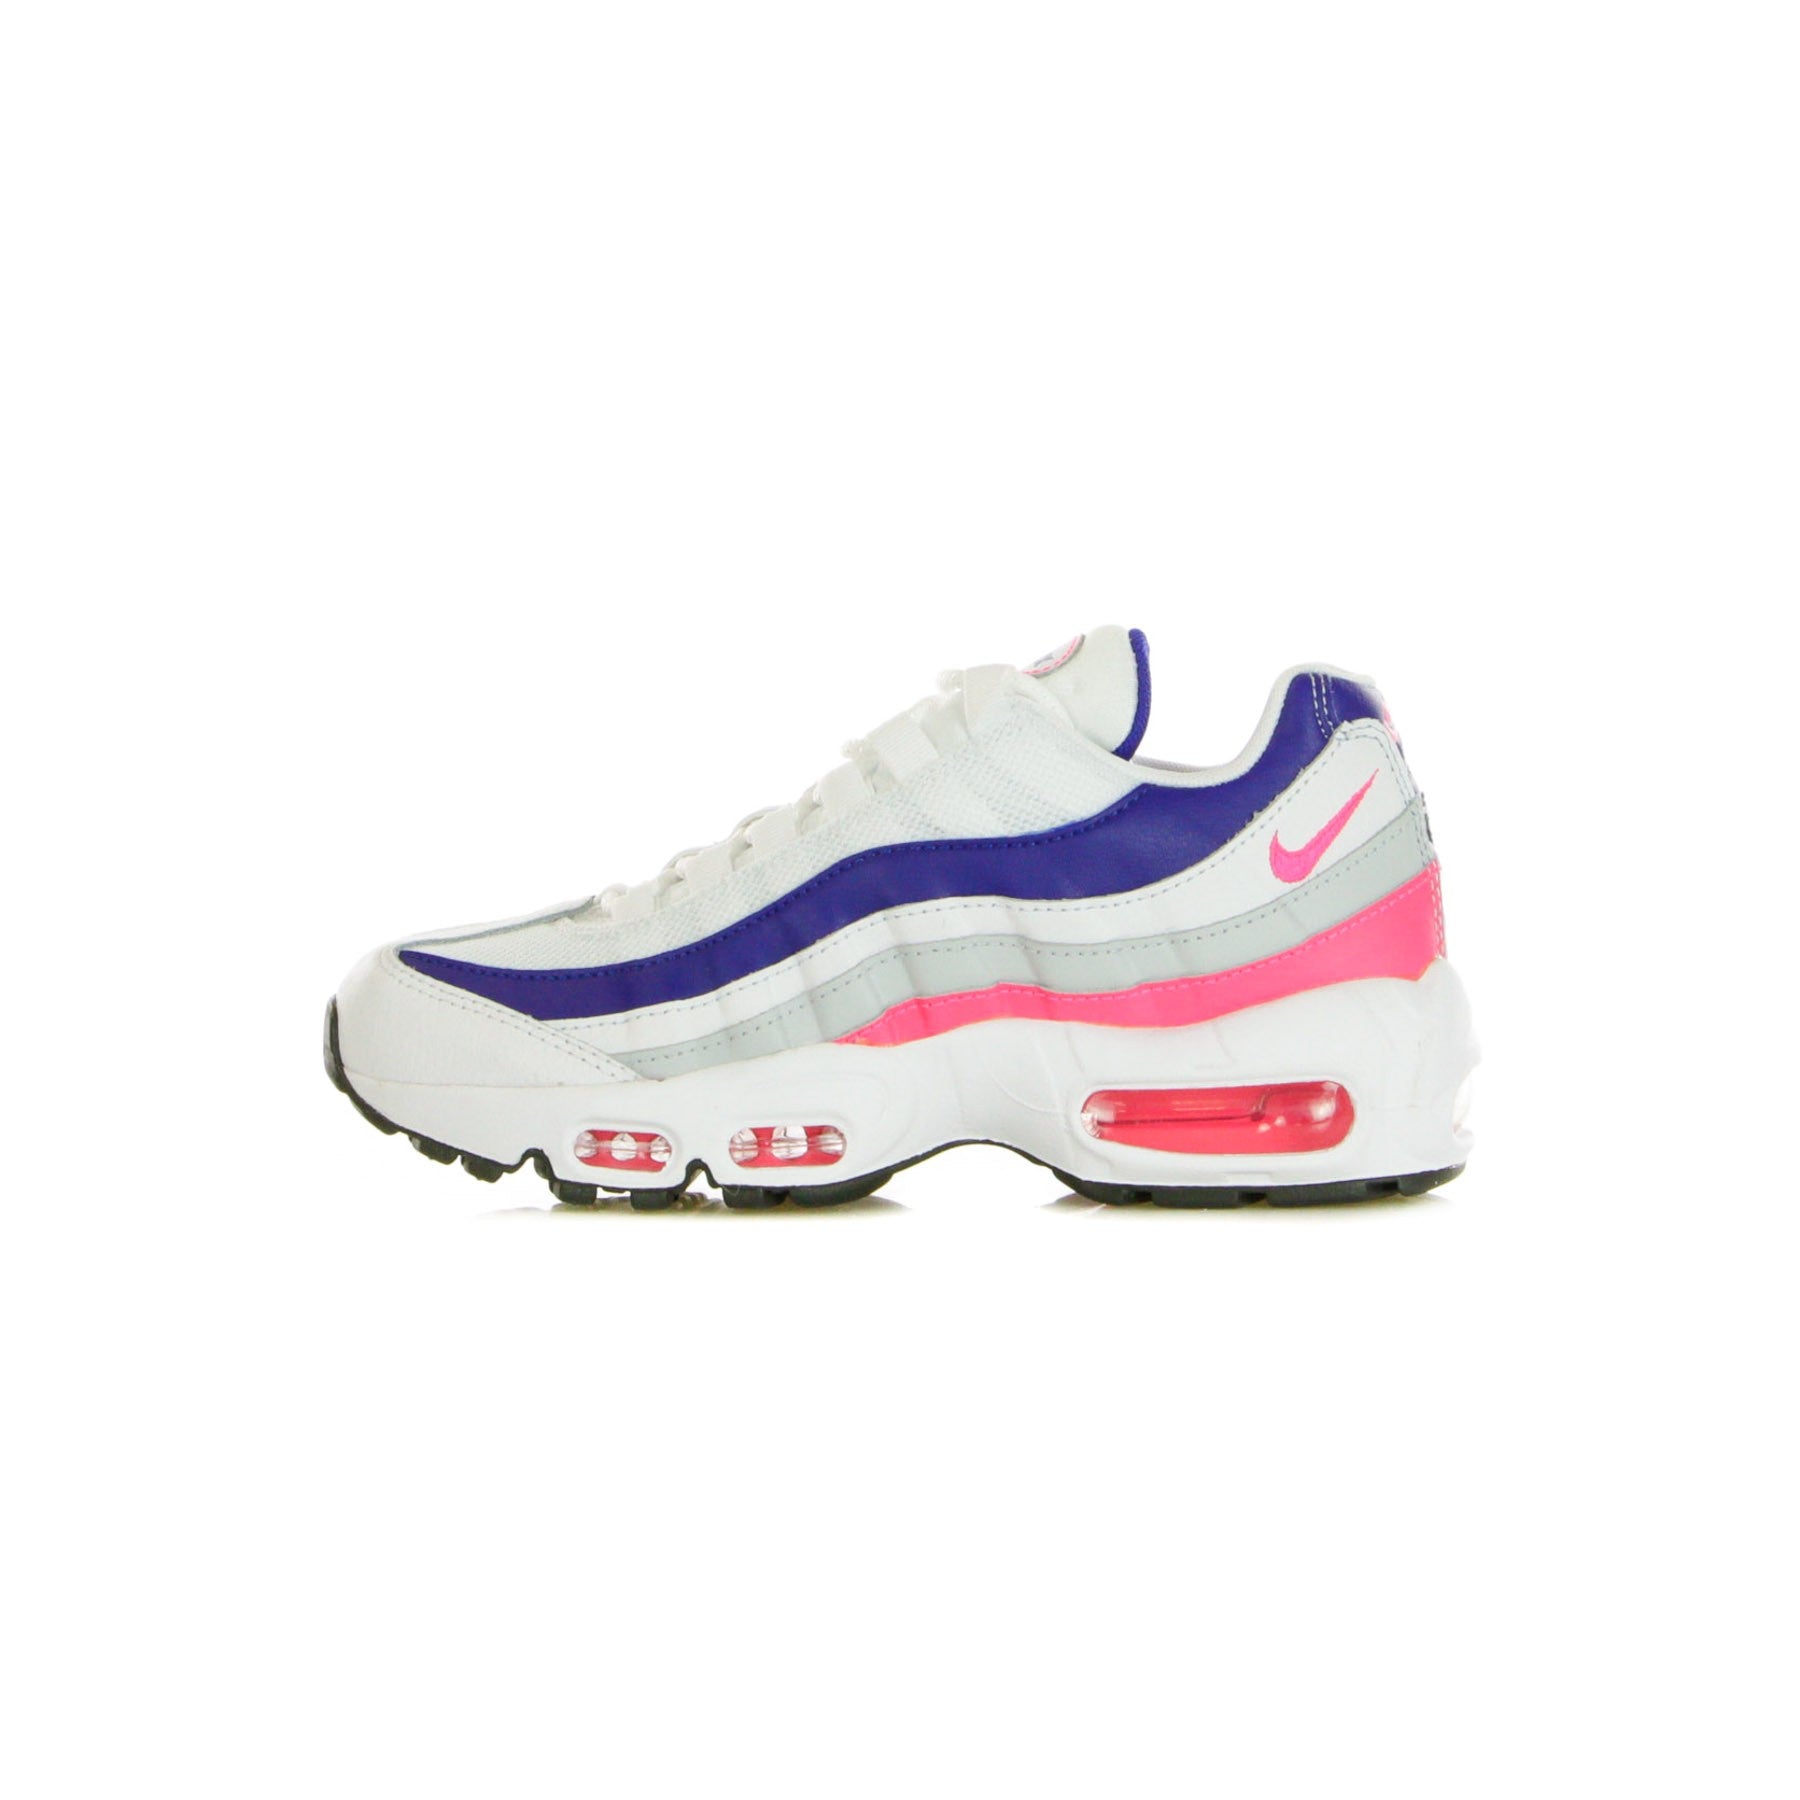 Nike, Scarpa Bassa Donna W Air Max 95, White/hyper Pink/concord/pure Platinum